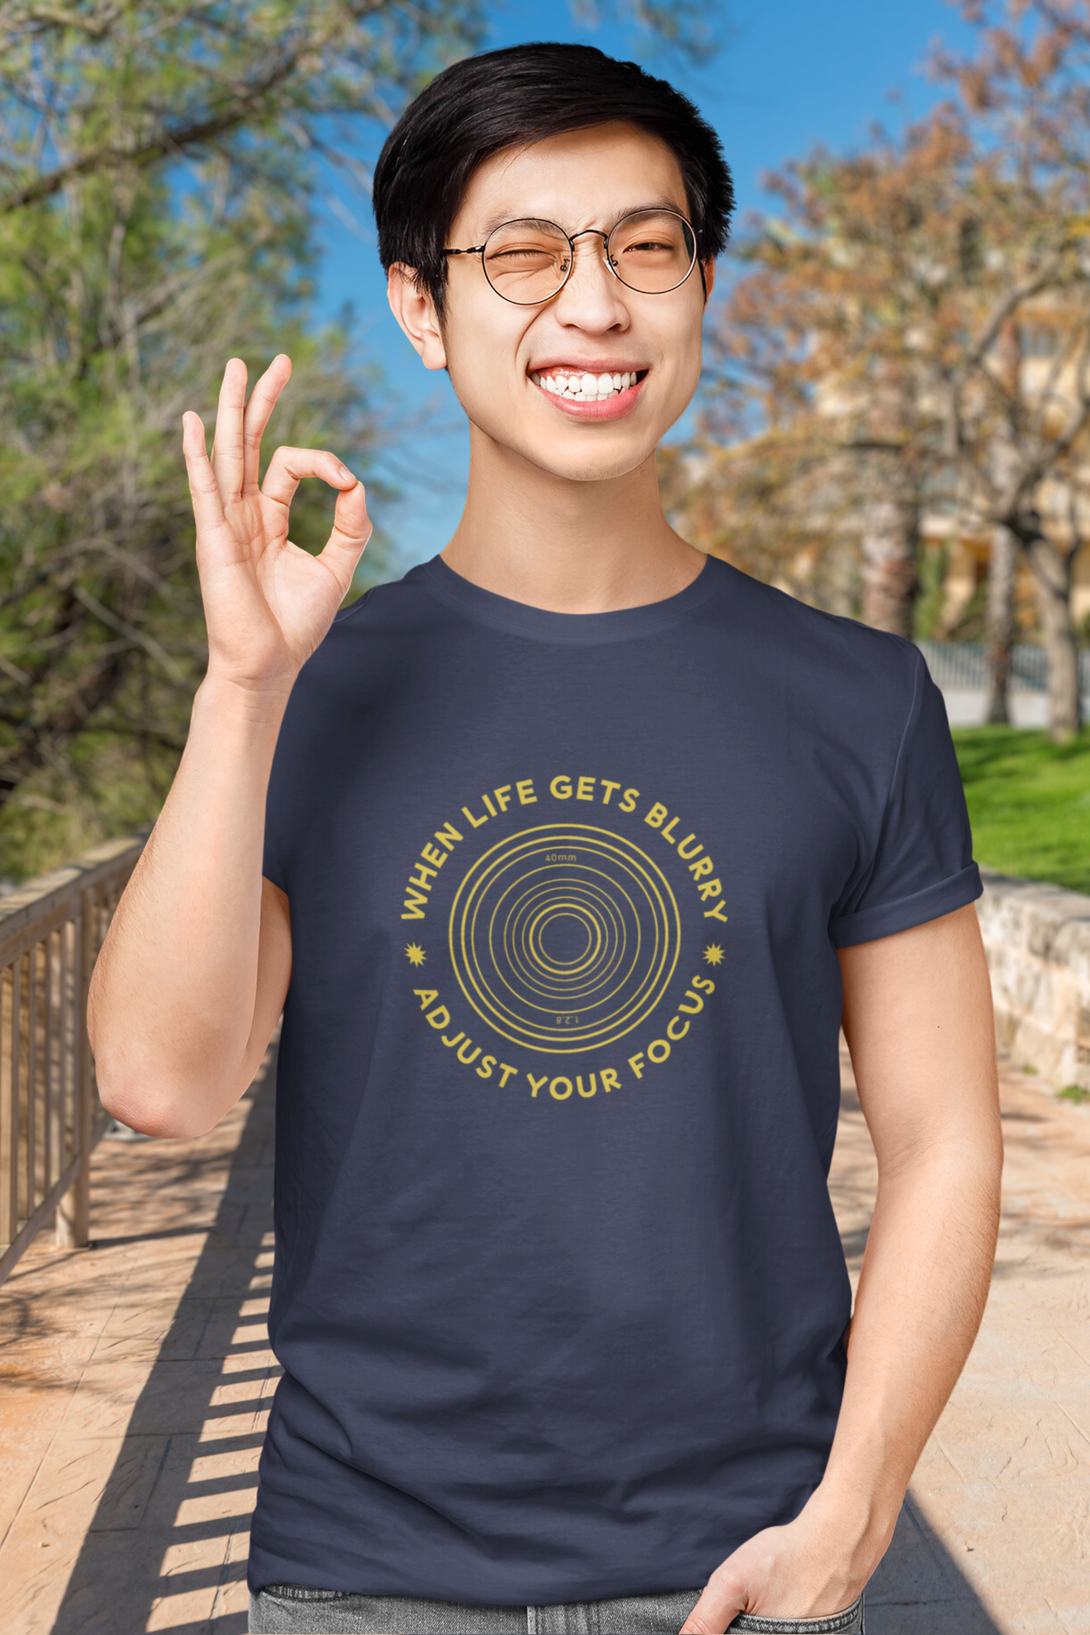 Adjust Your Focus Printed T-Shirt For Men - WowWaves - 4